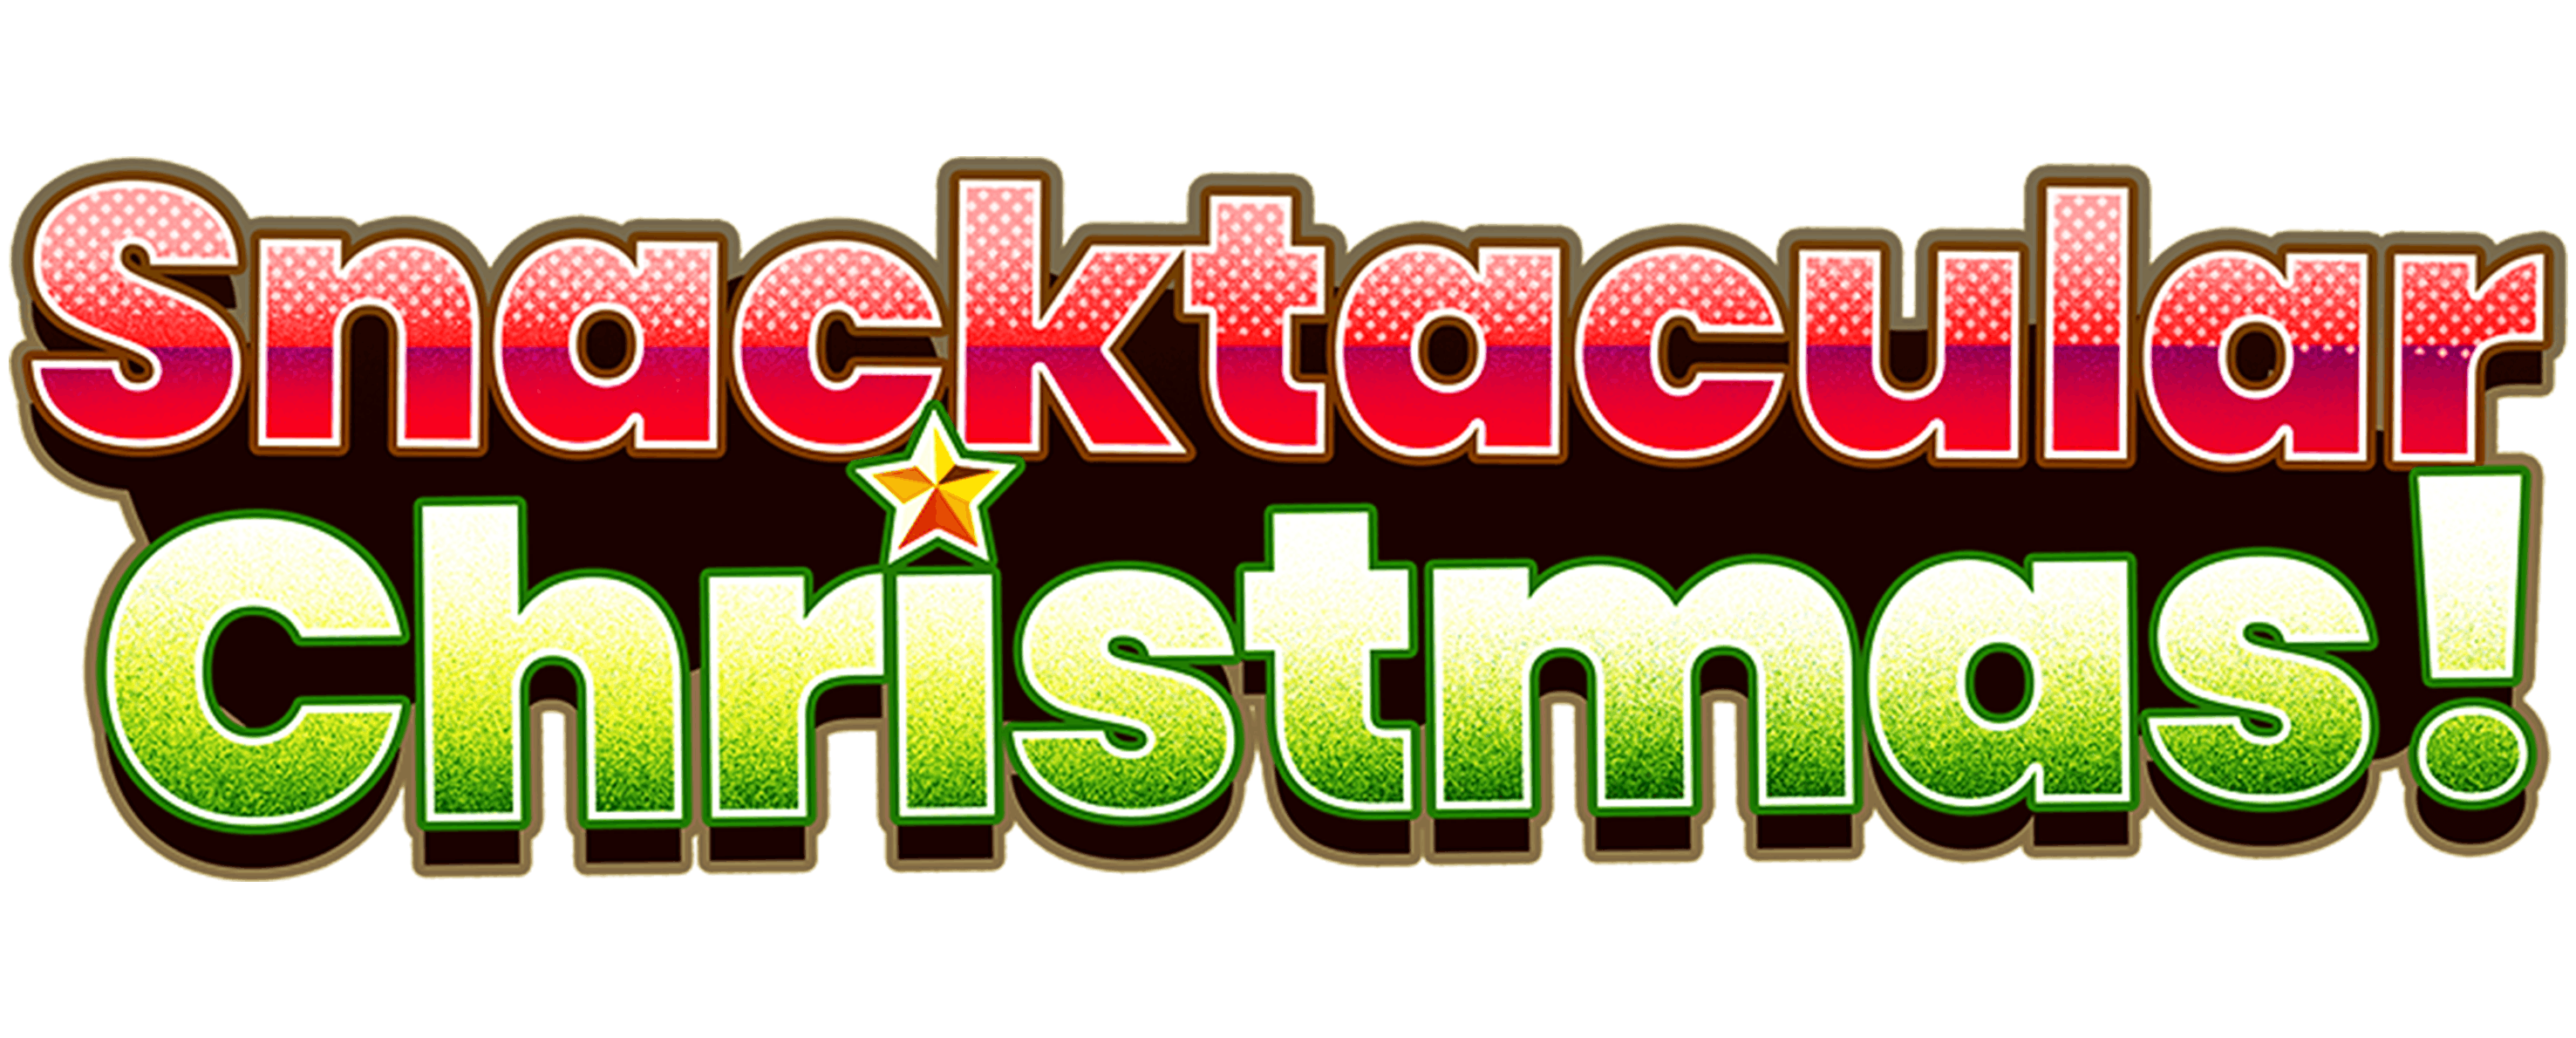 Snacktacular Christmas logo.